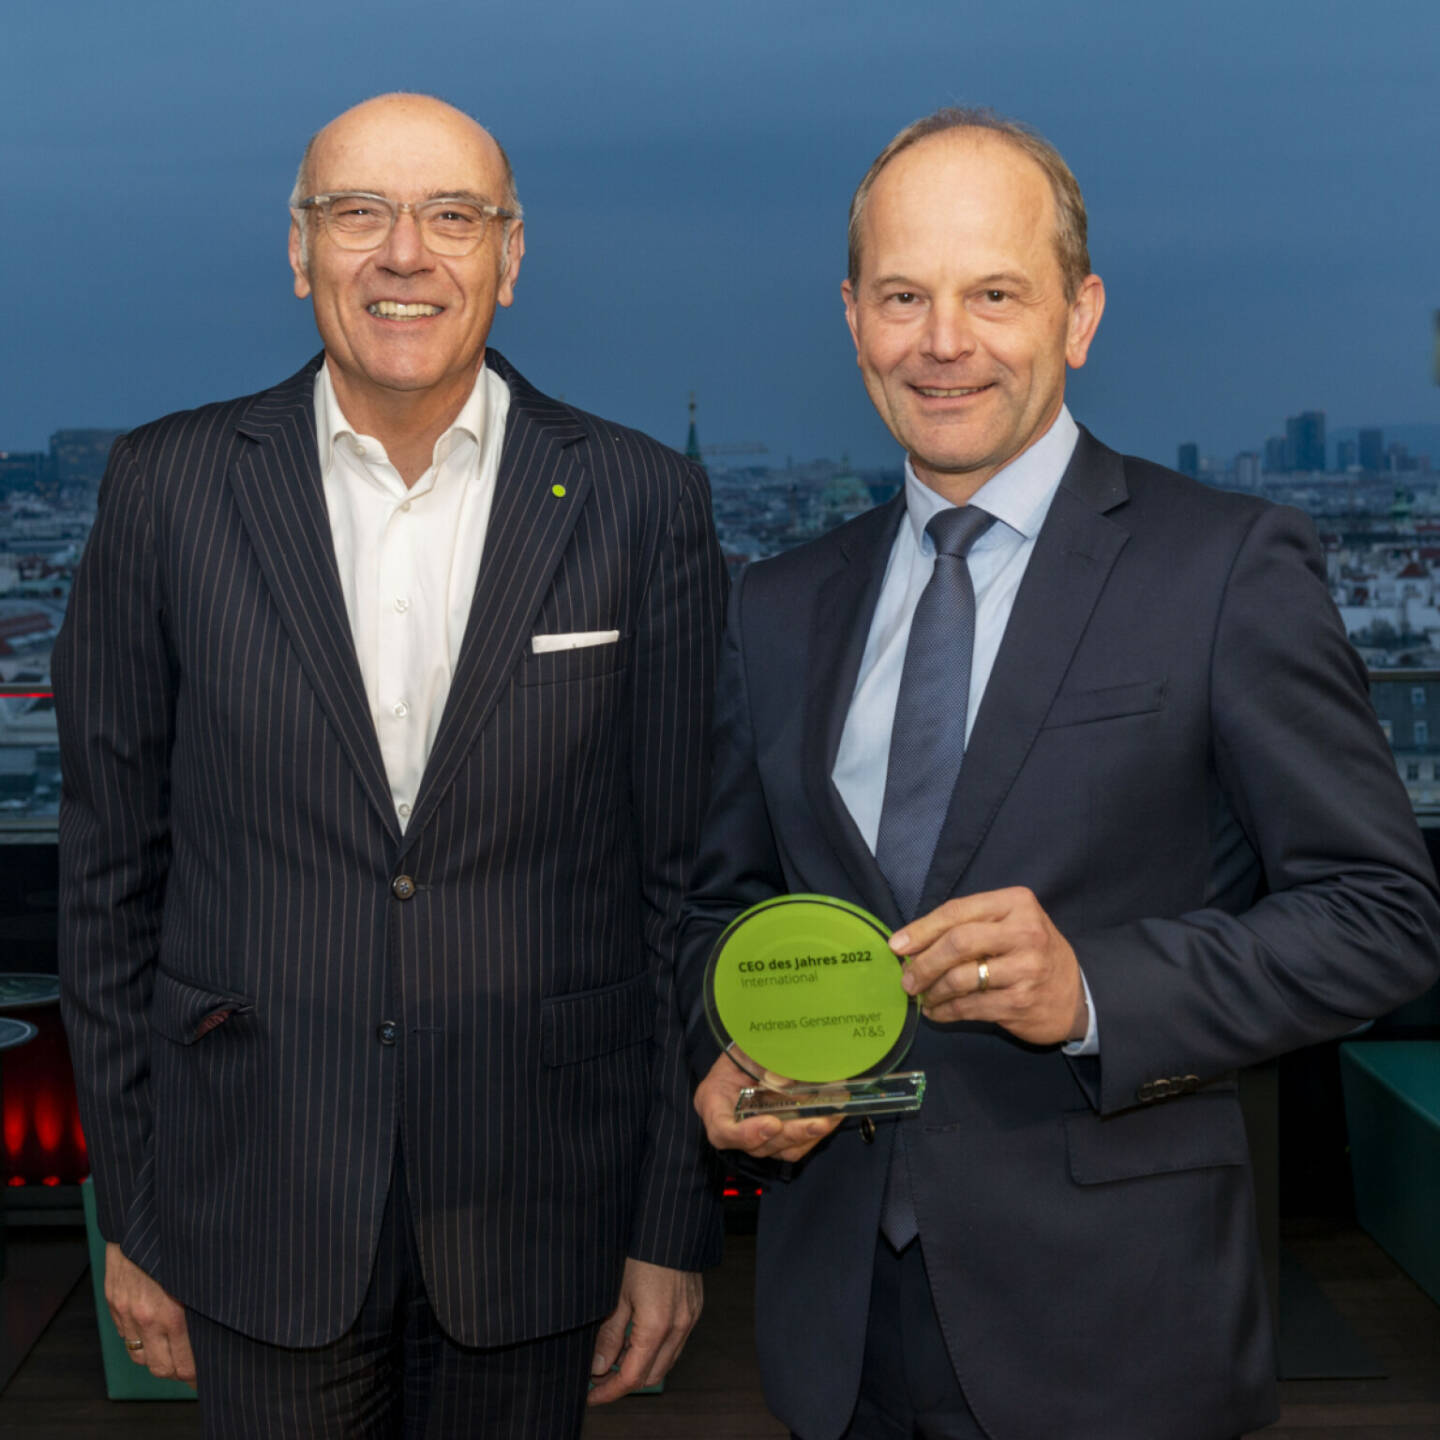 Andreas Gerstenmayer mit CEO Award 2022 ausgezeichnet, im Bild: Andreas Gerstenmayer (AT&S) (rechts) und Nikolaus Schaffer (Deloitte)
Fotocredit: börse-express/Themessl